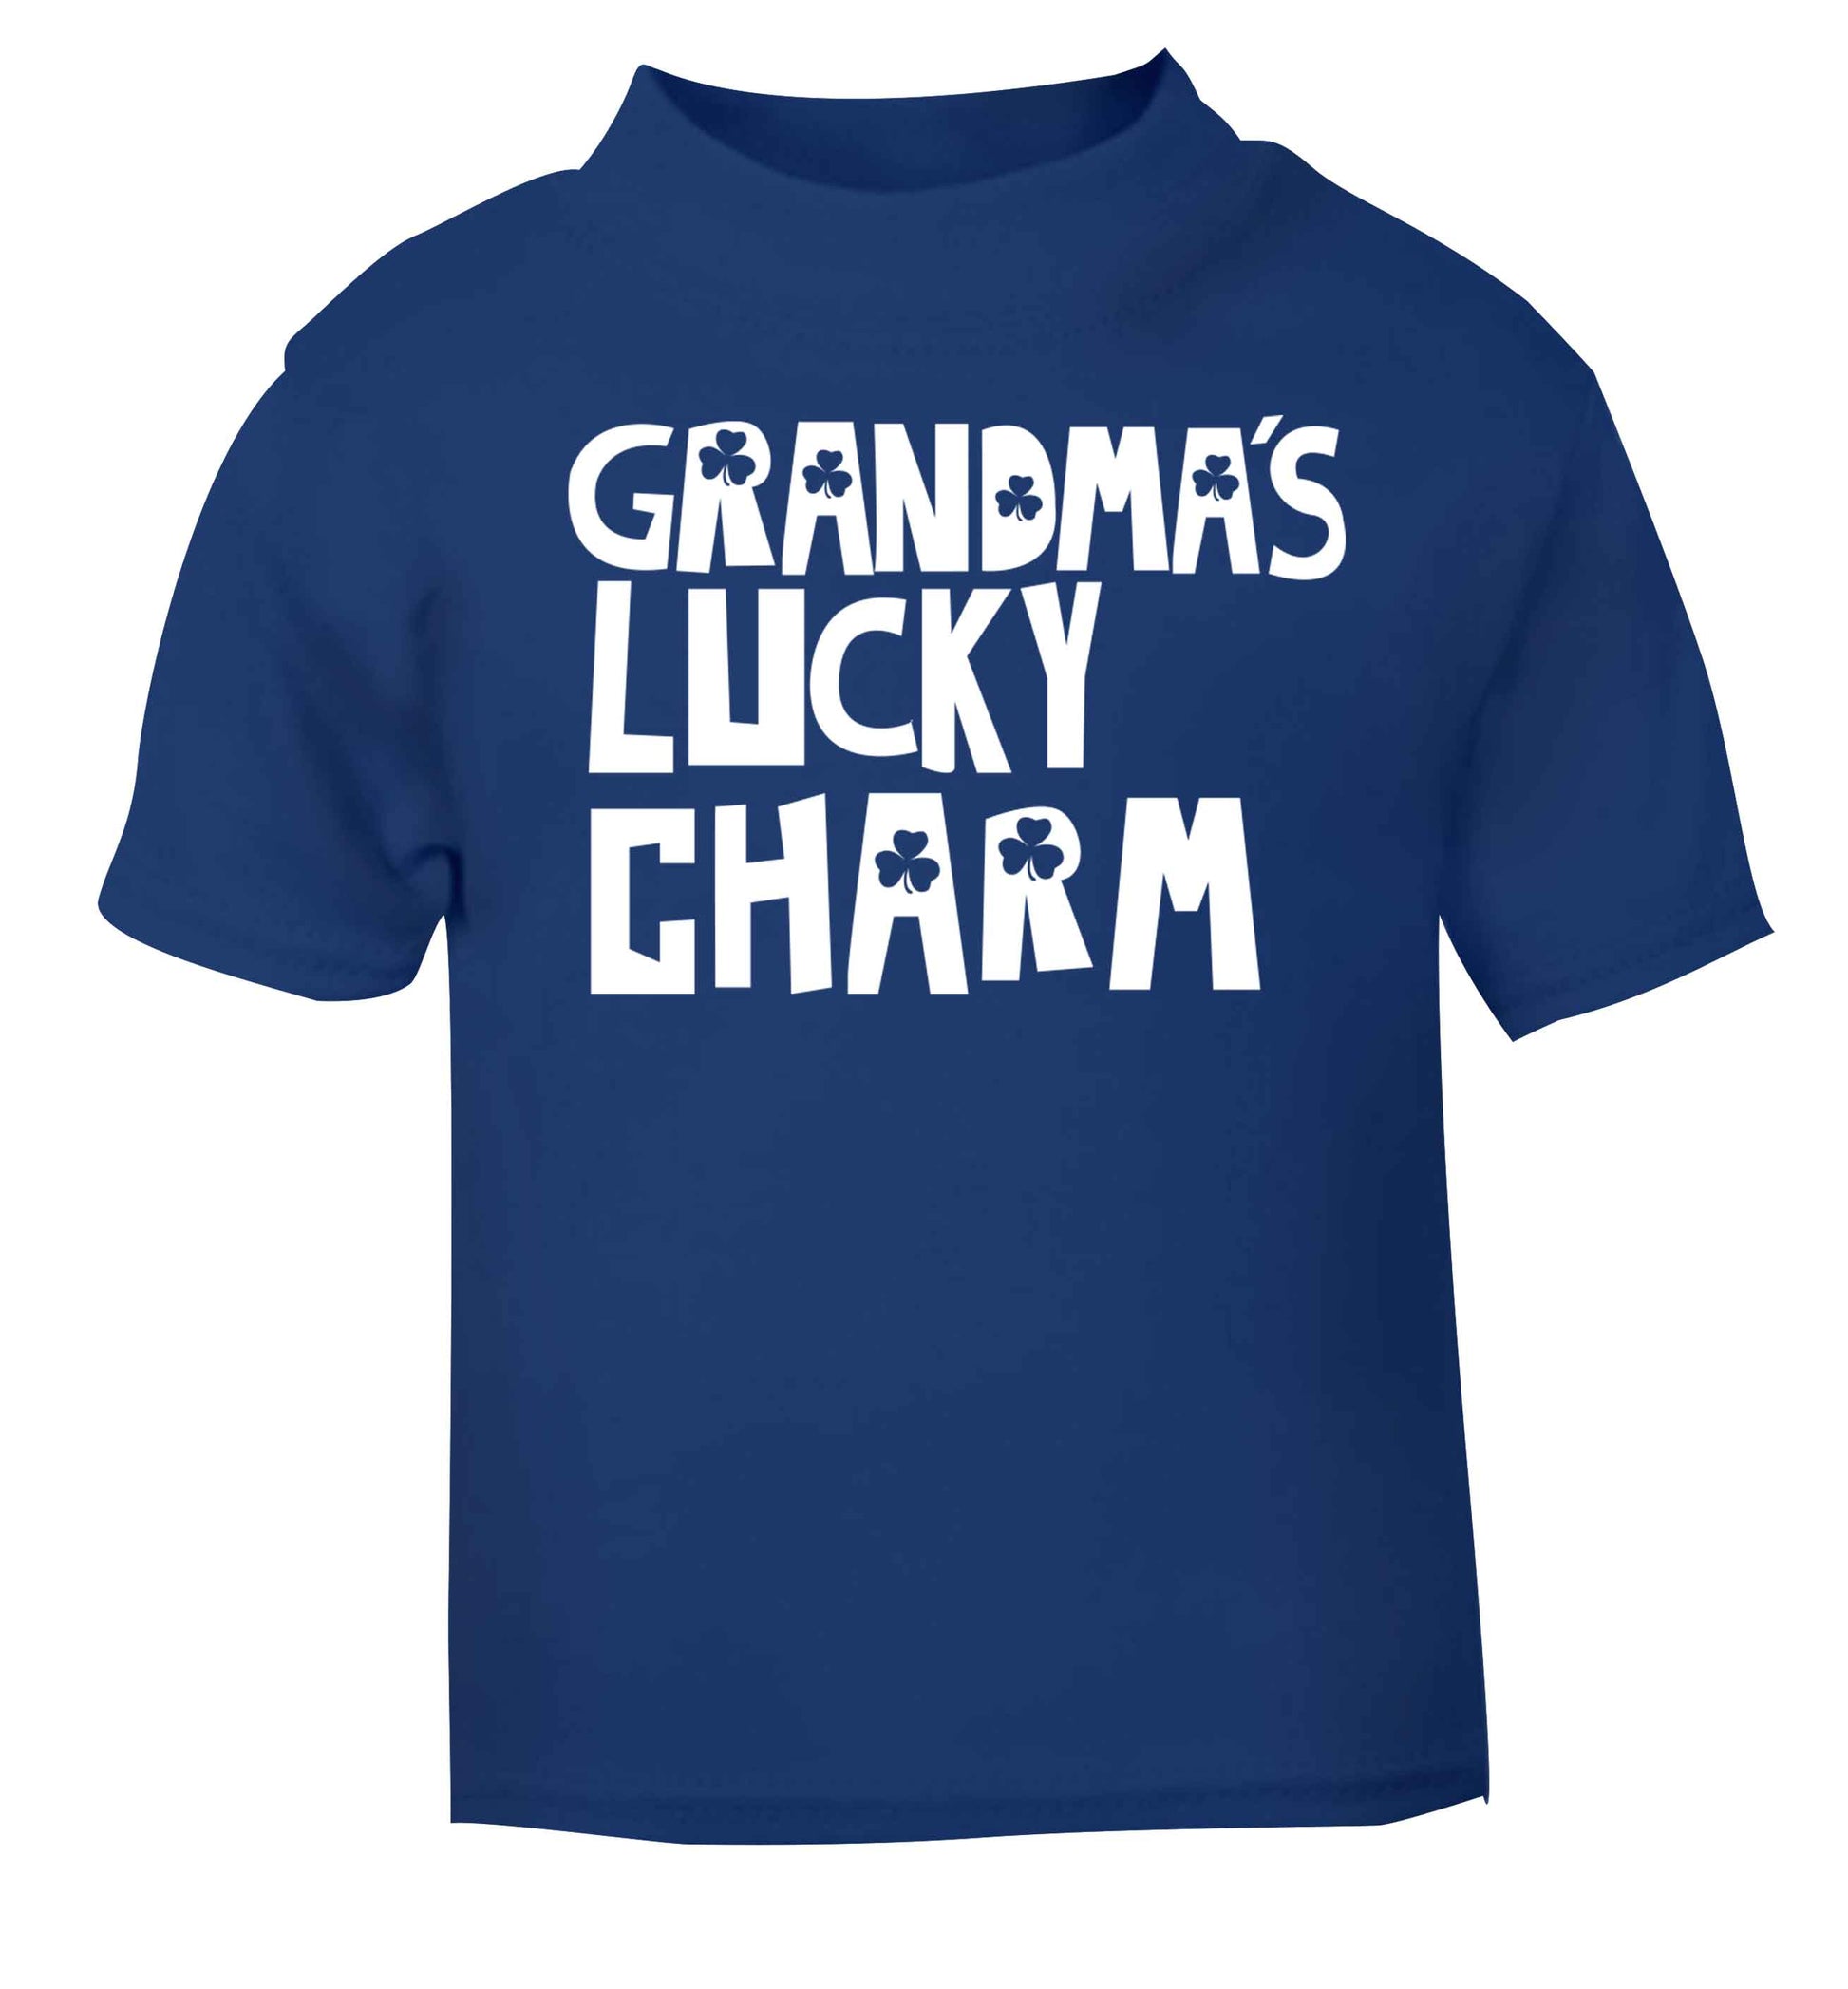 Grandma's lucky charm blue baby toddler Tshirt 2 Years